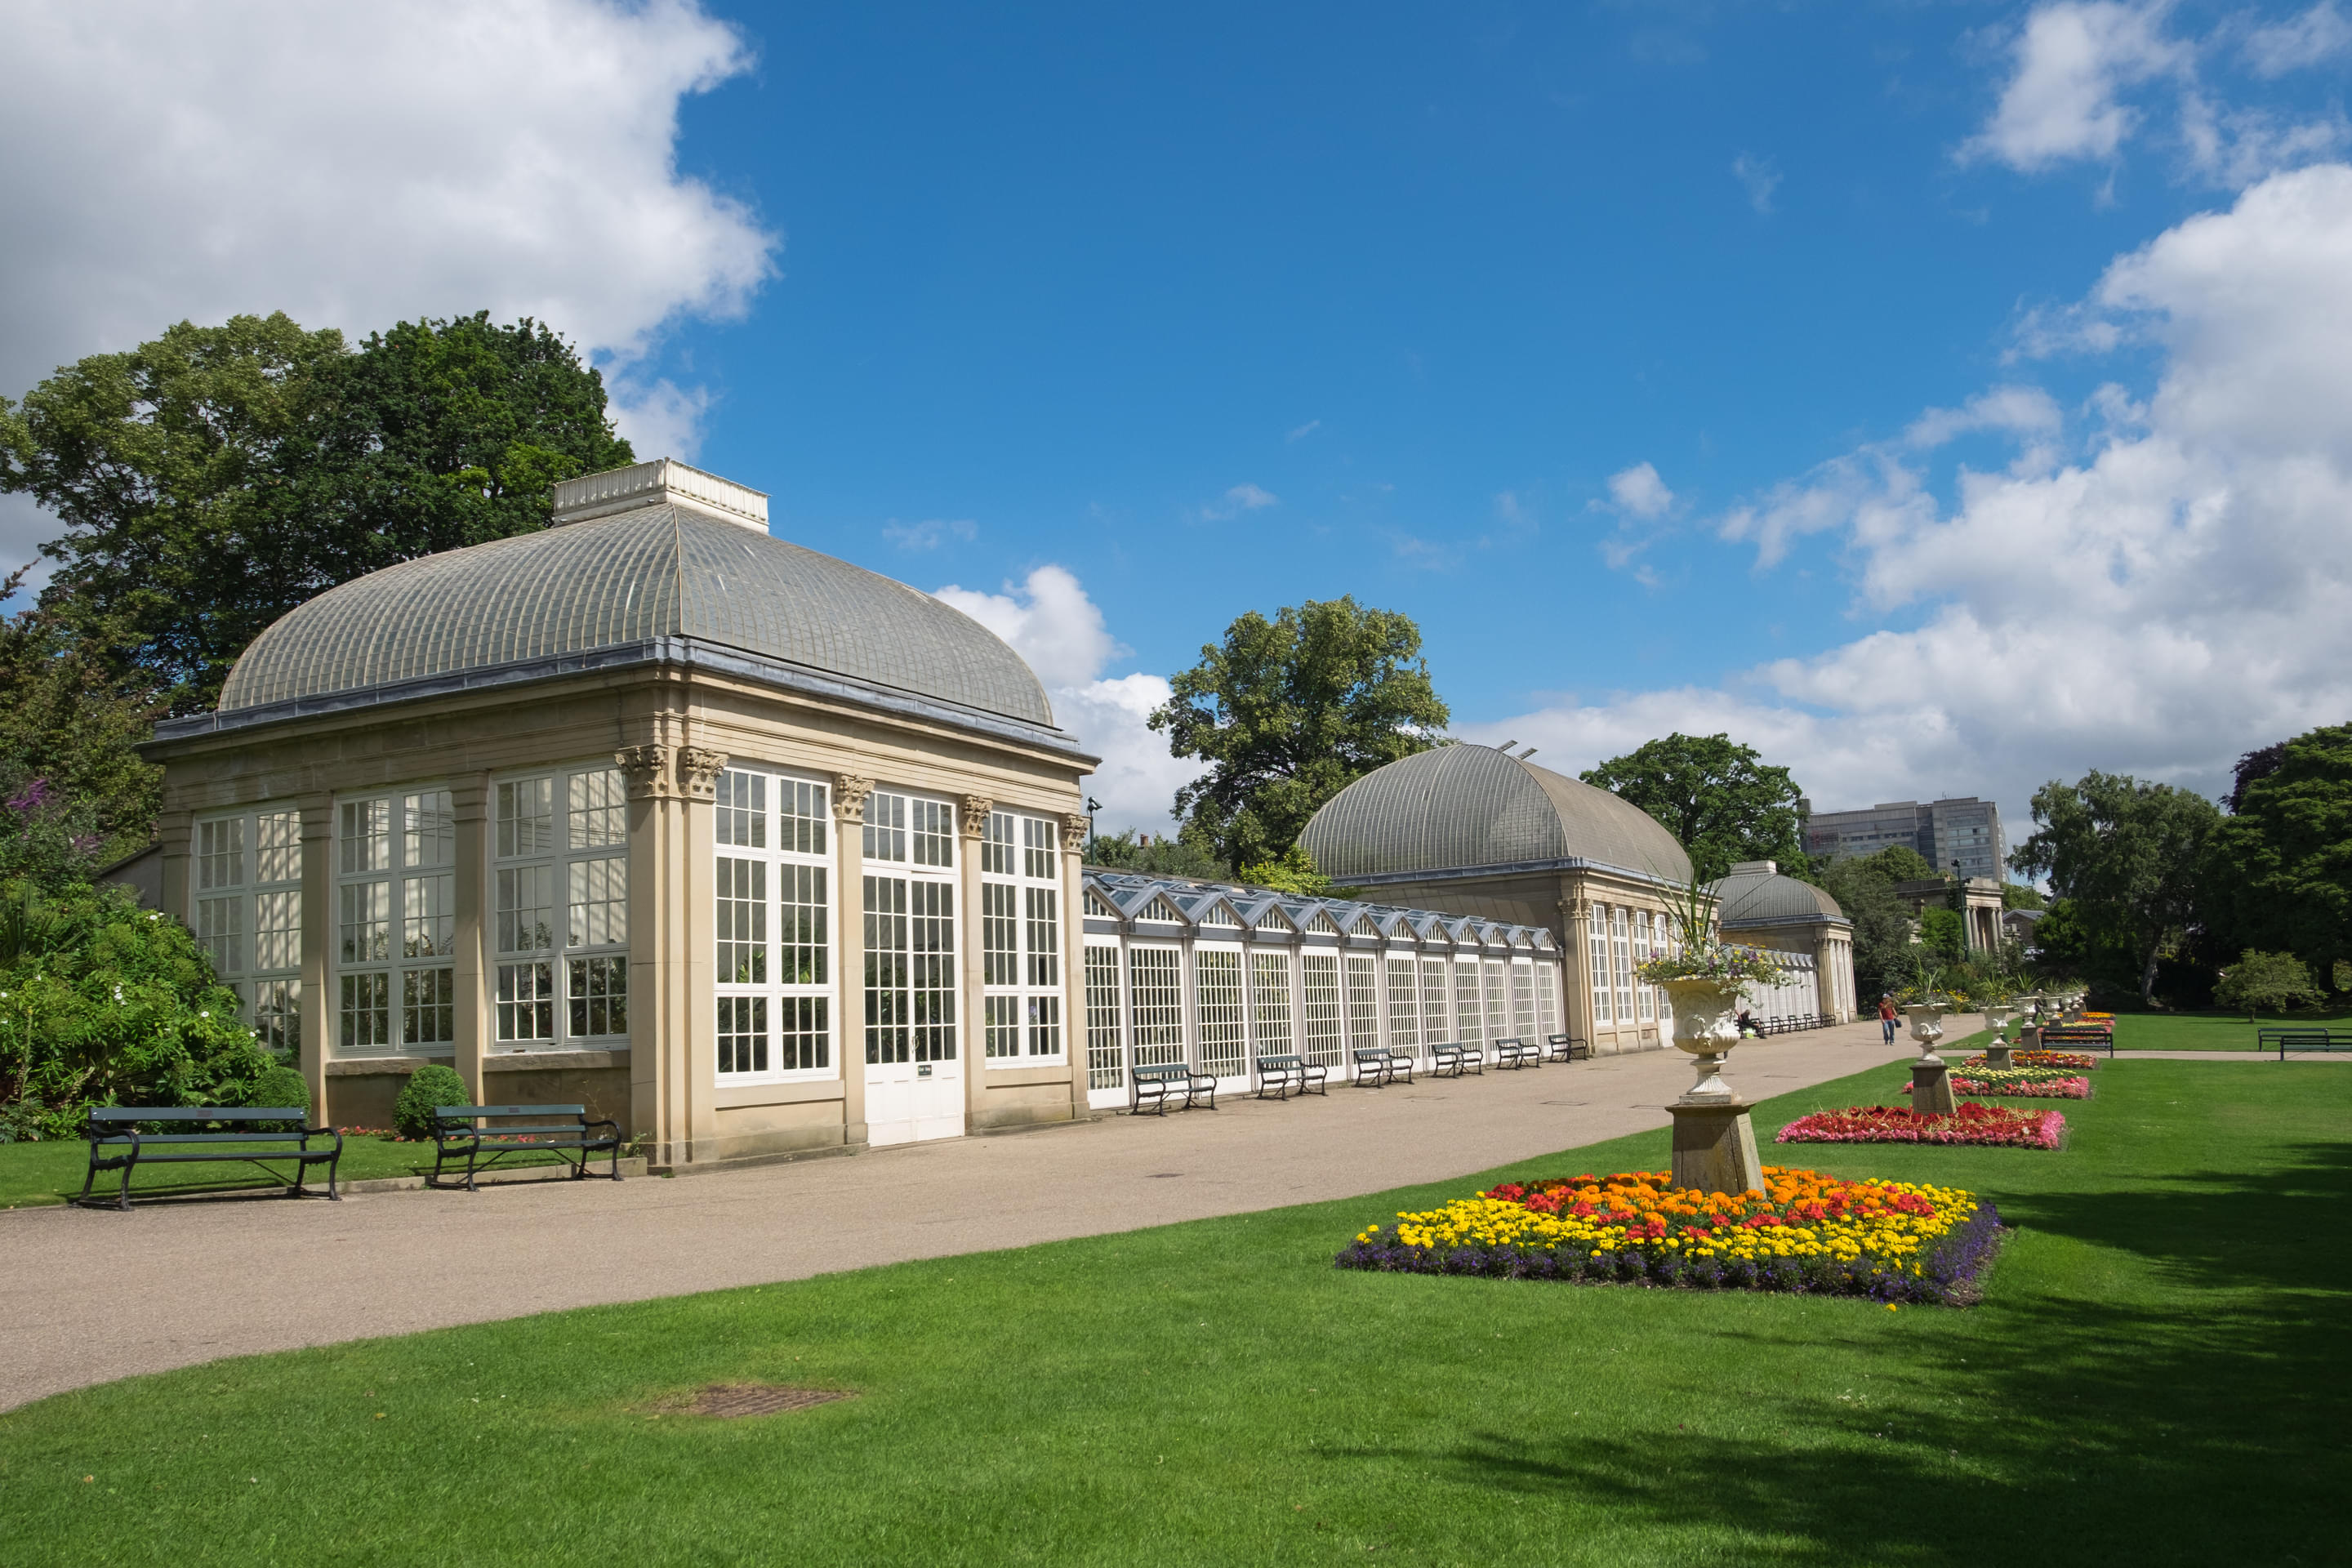 Sheffield Botanical Gardens Overview